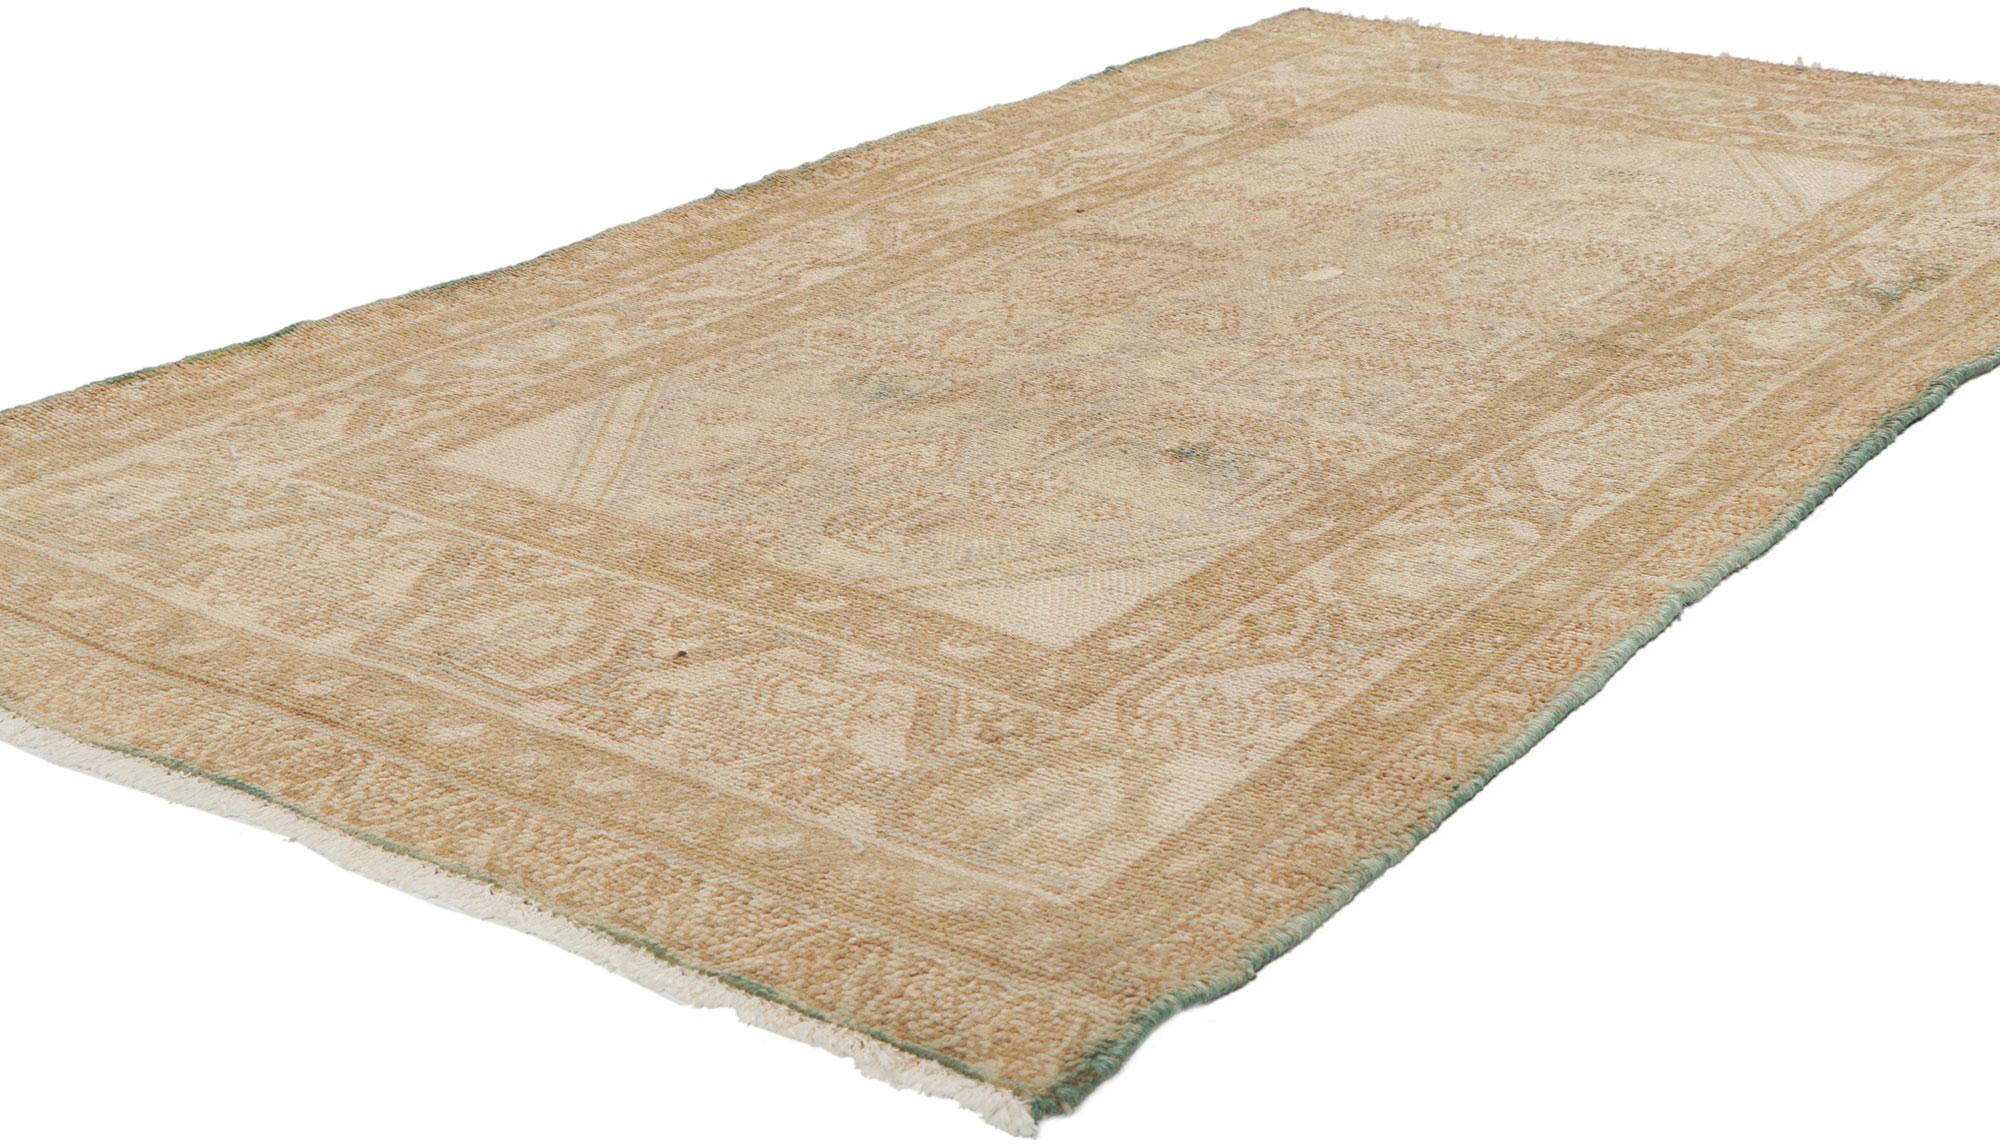 61062 Antique Persian Malayer rug, 03'06 x 06'06.
Abrash. Antique Wash. Desirable Age Wear.